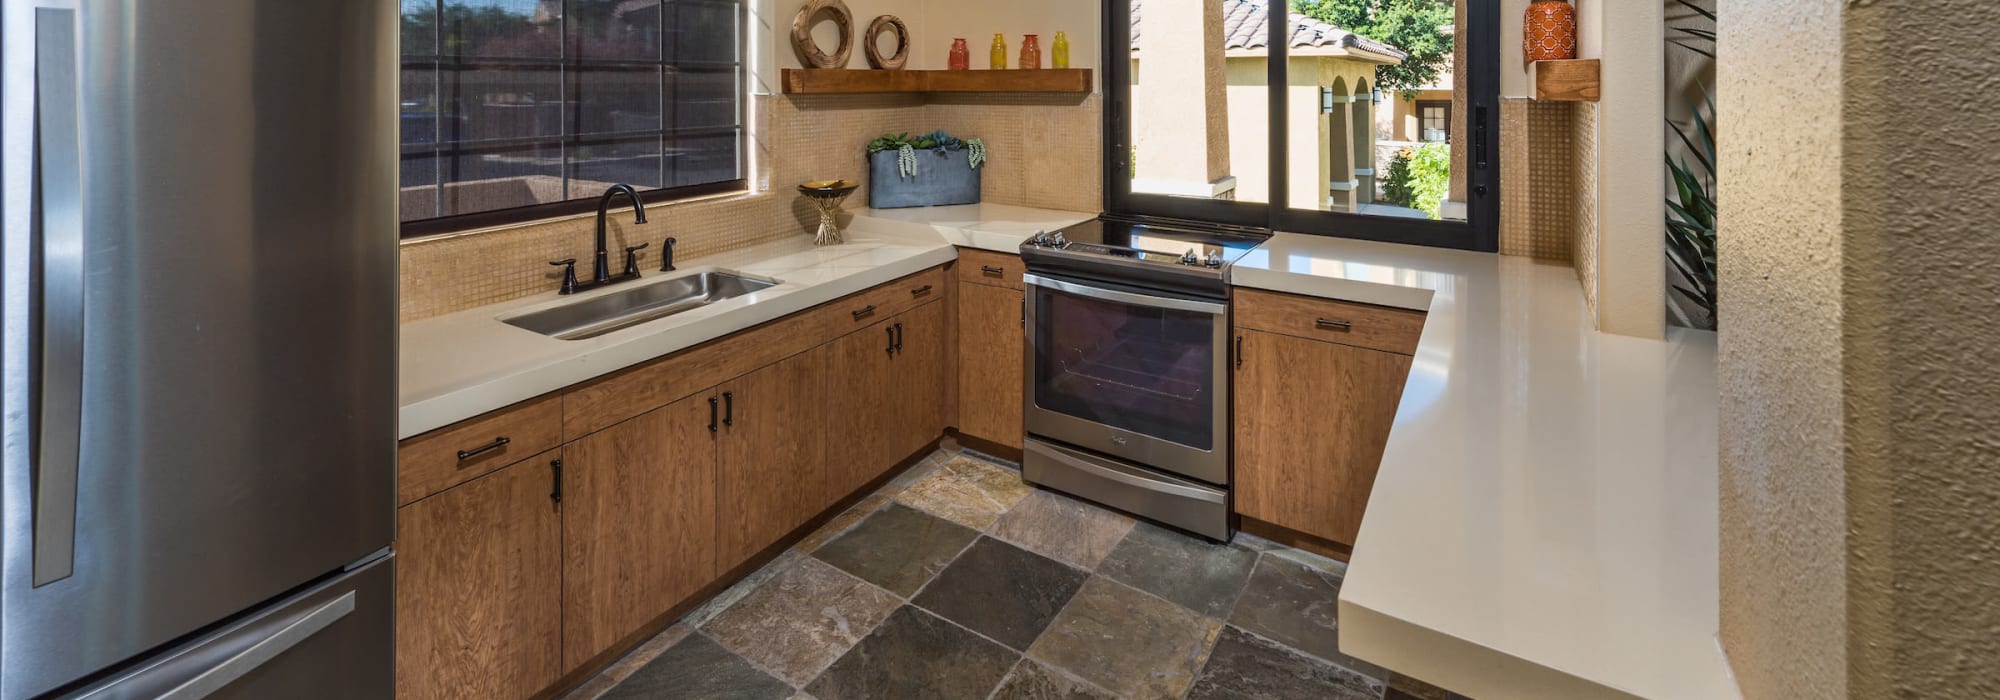 Luxury kitchen at Stone Oaks in Chandler, Arizona